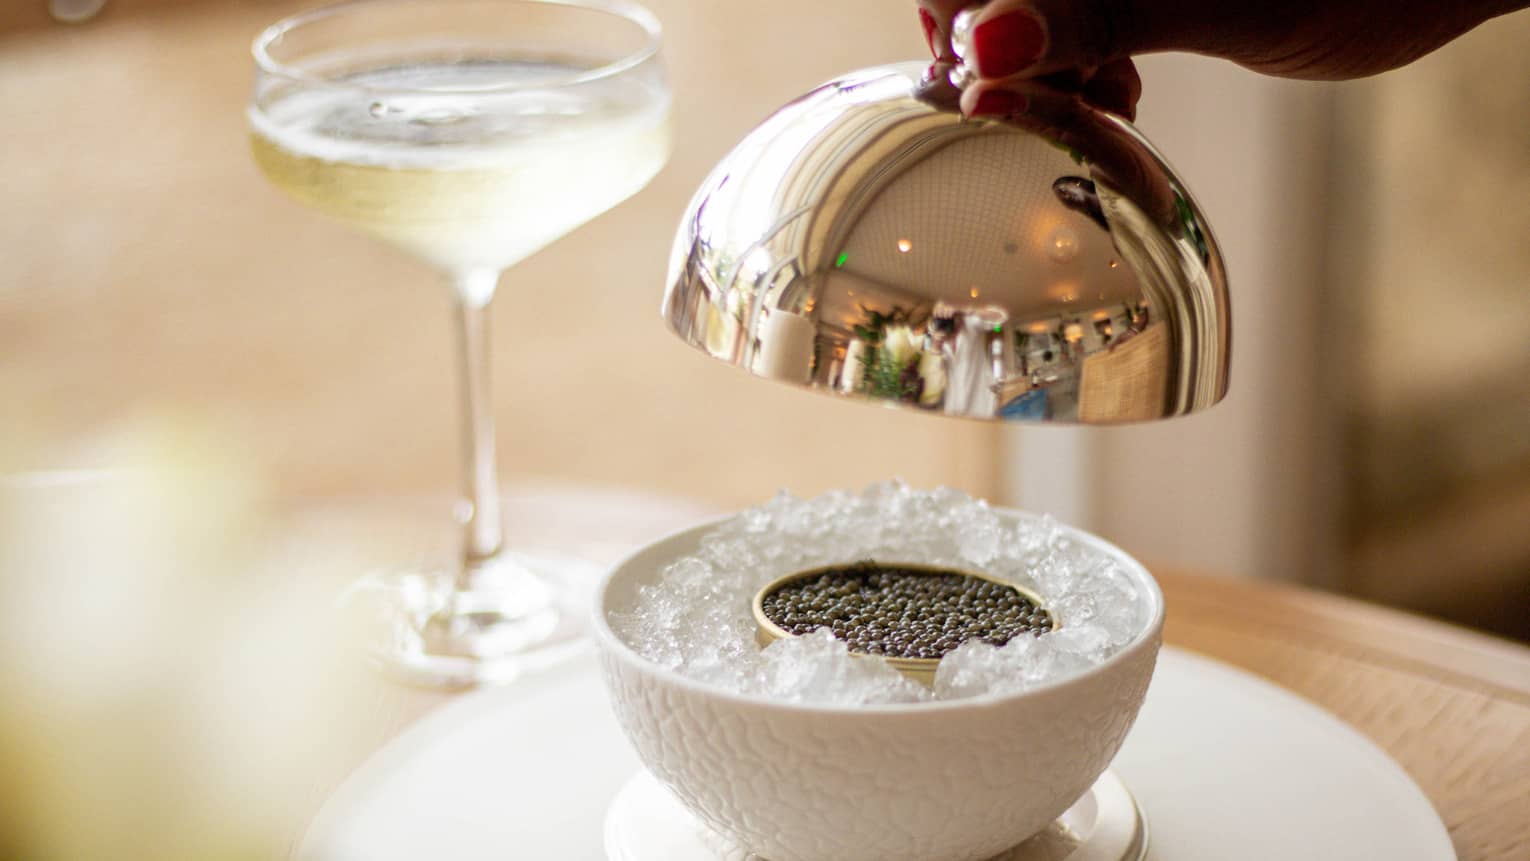 Caviar on ice next to a glass of wine.